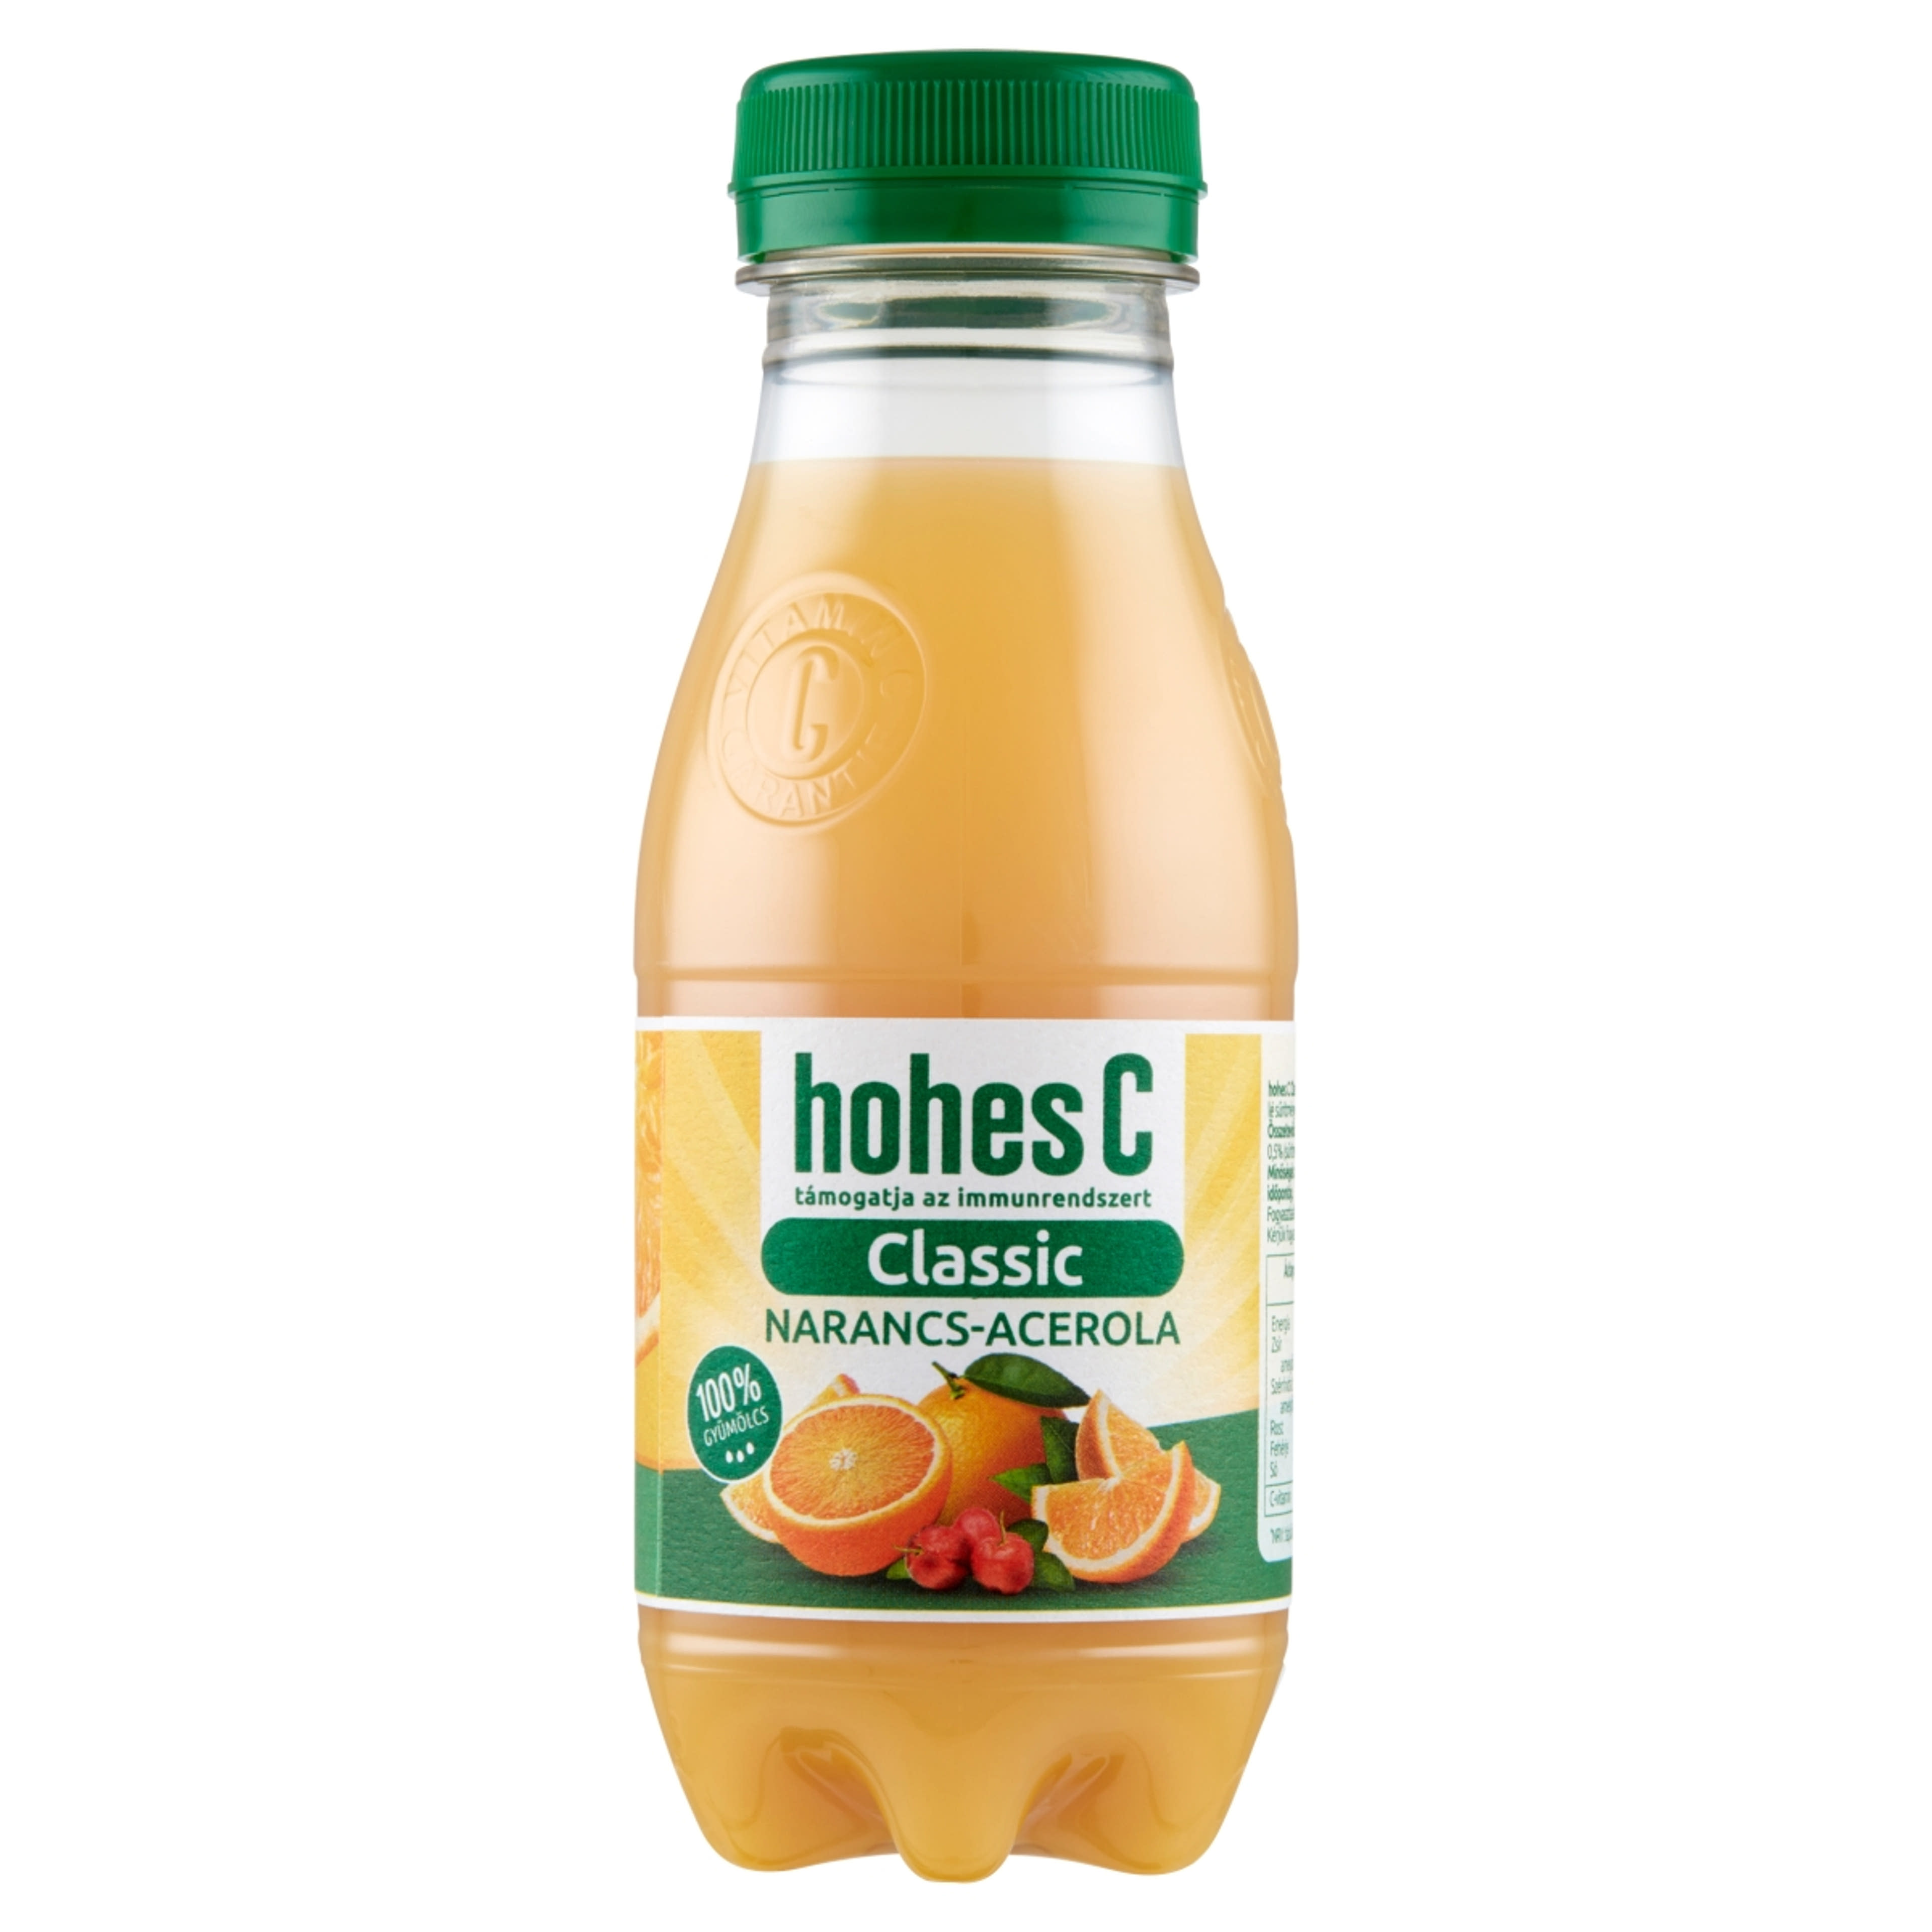 Hohes C narancs - acerola 100% - 250 ml